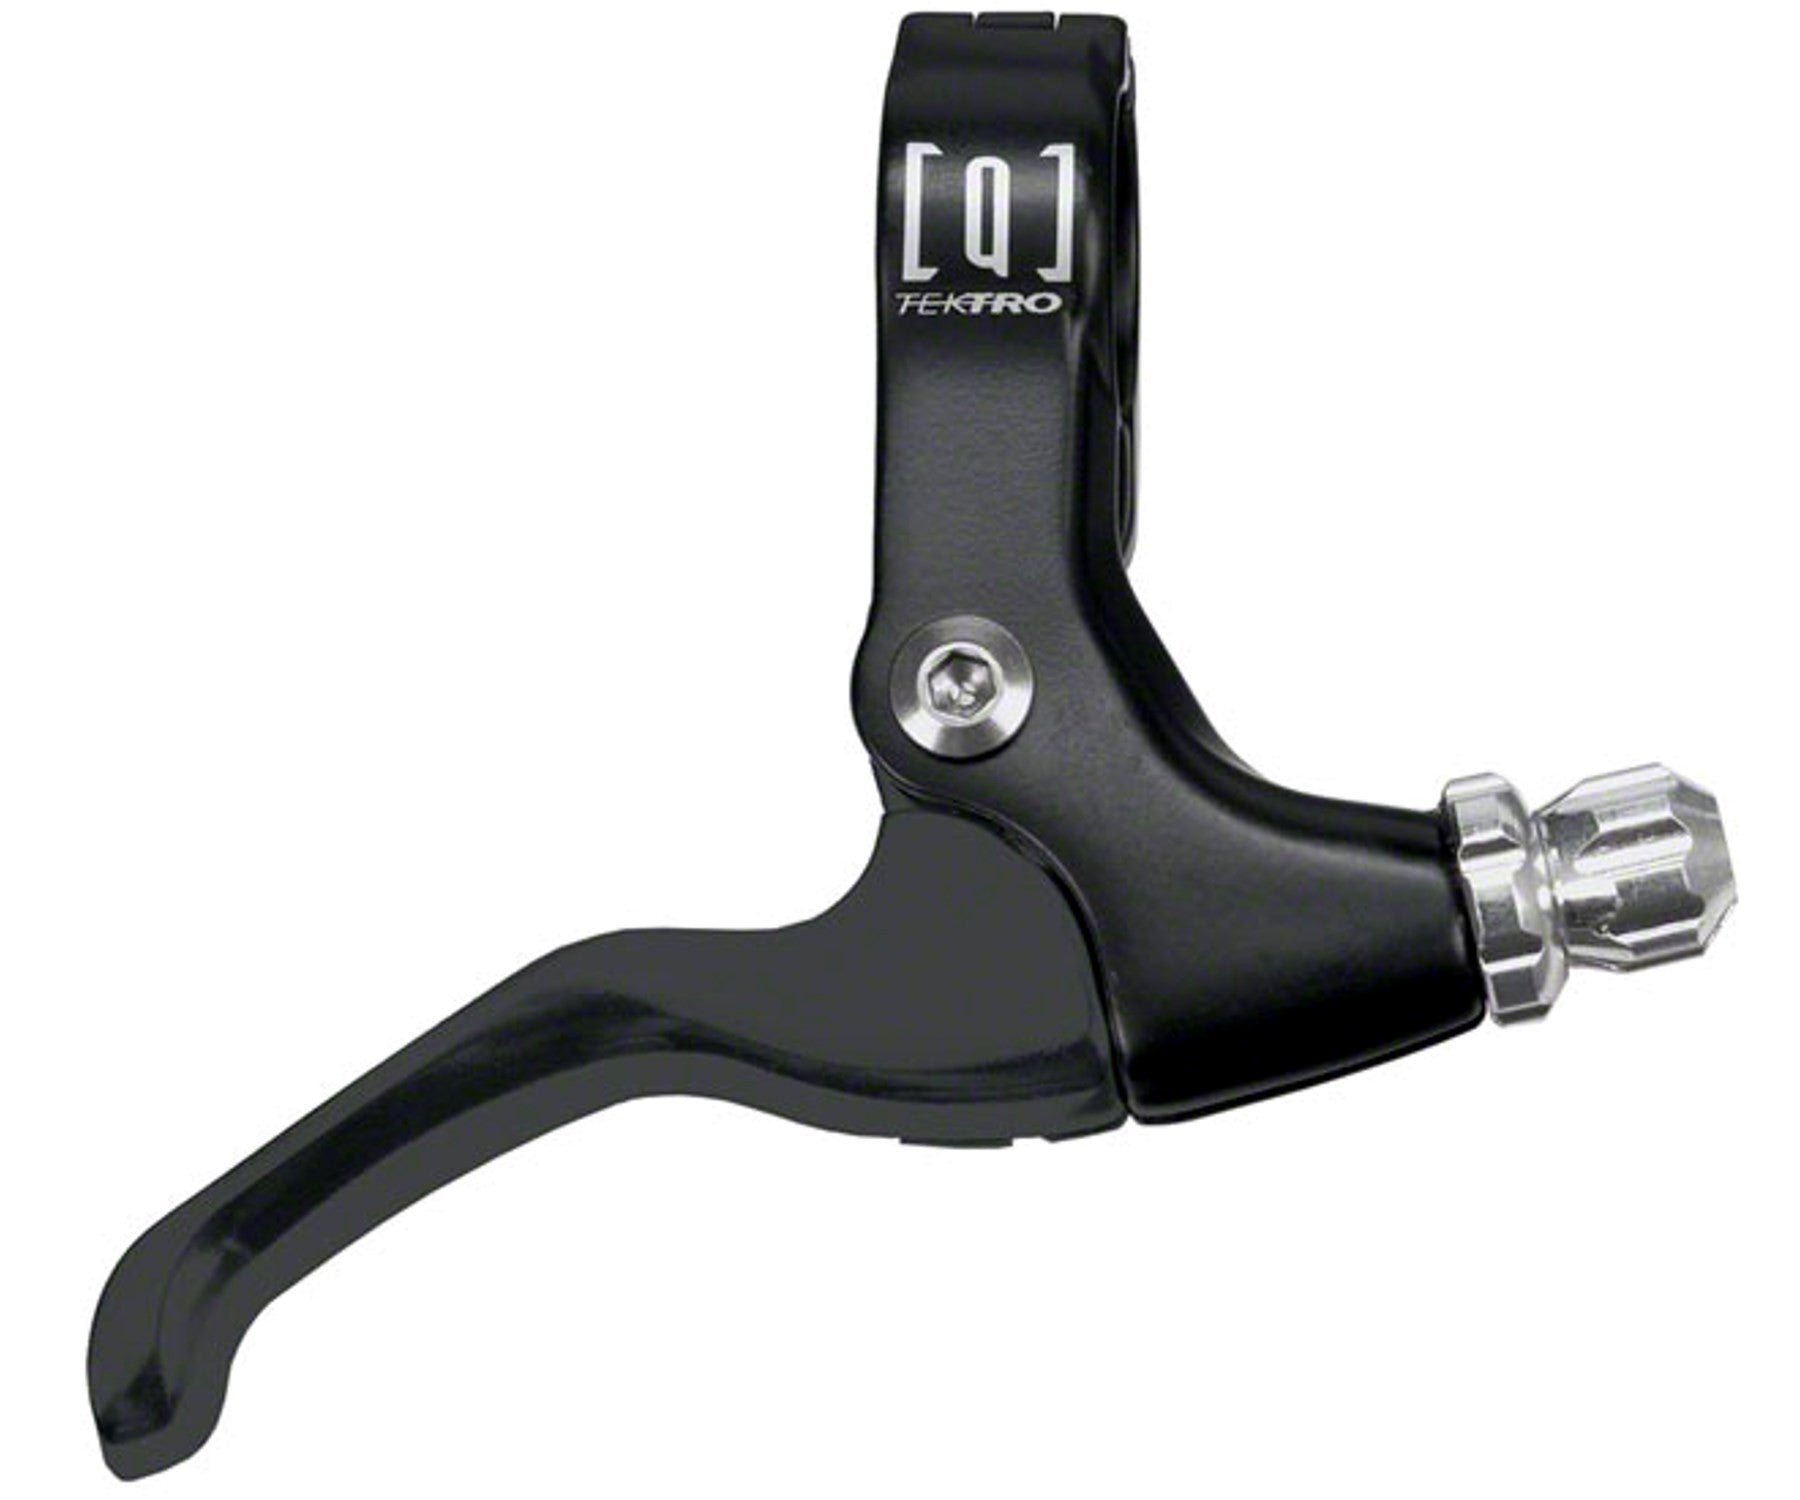 Tektro XL750 brake lever – Retrogression